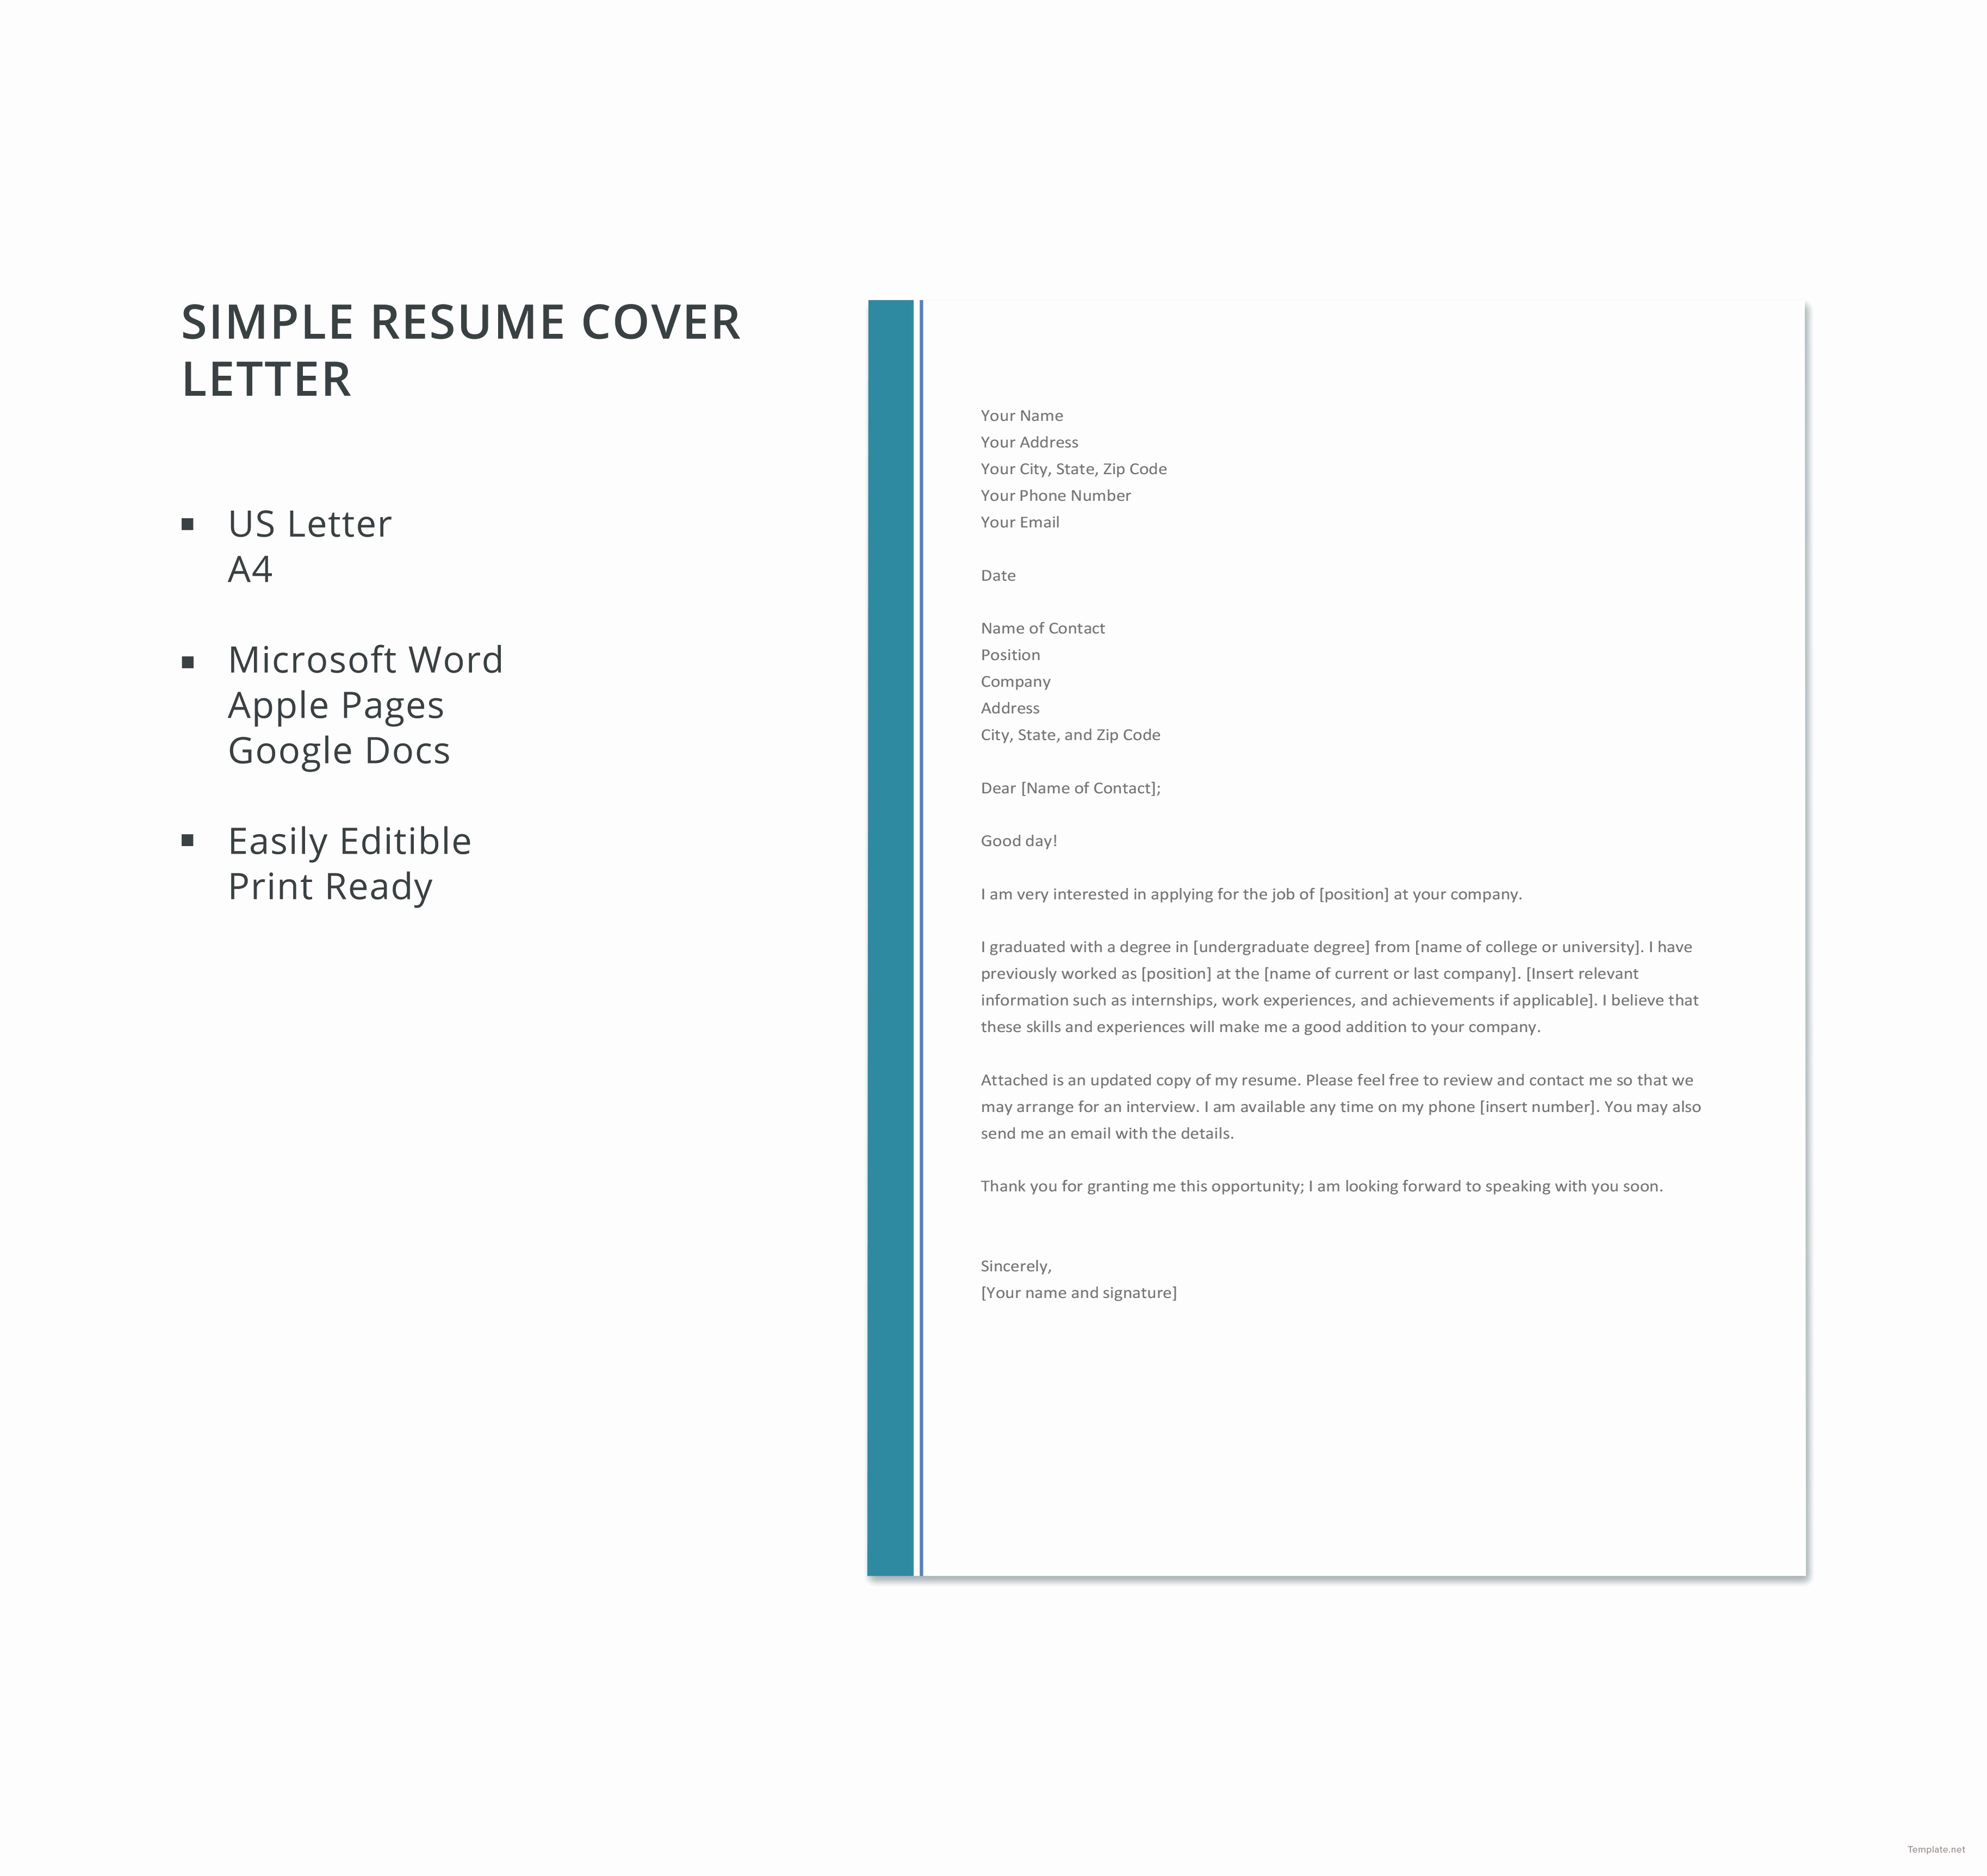 Easy Cover Letter for Resume Best Of Simple Resume Cover Letter